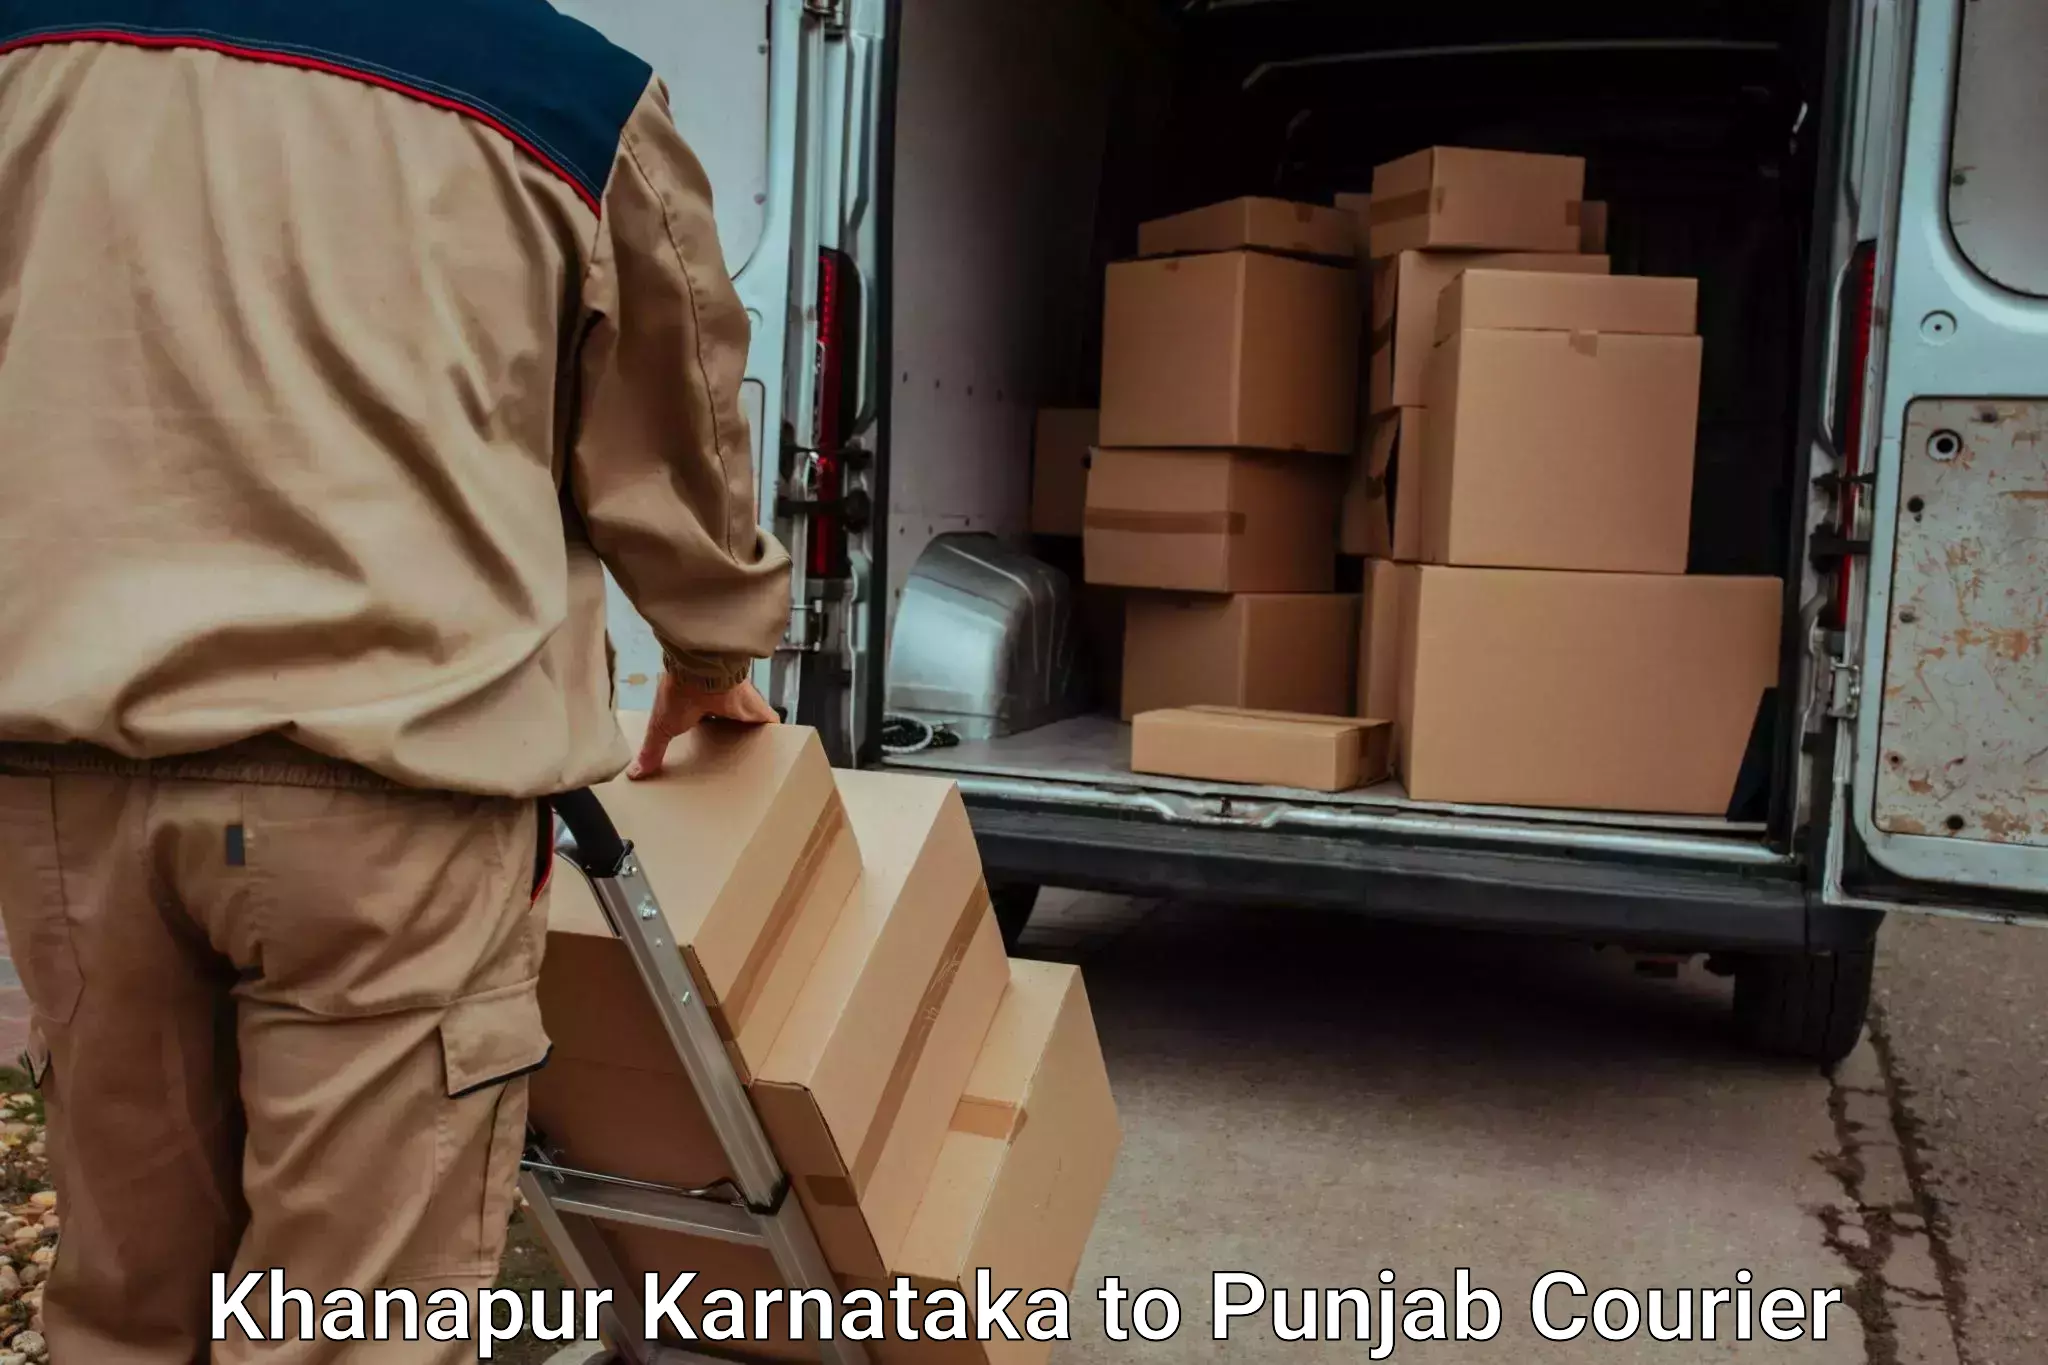 Professional furniture movers Khanapur Karnataka to Machhiwara